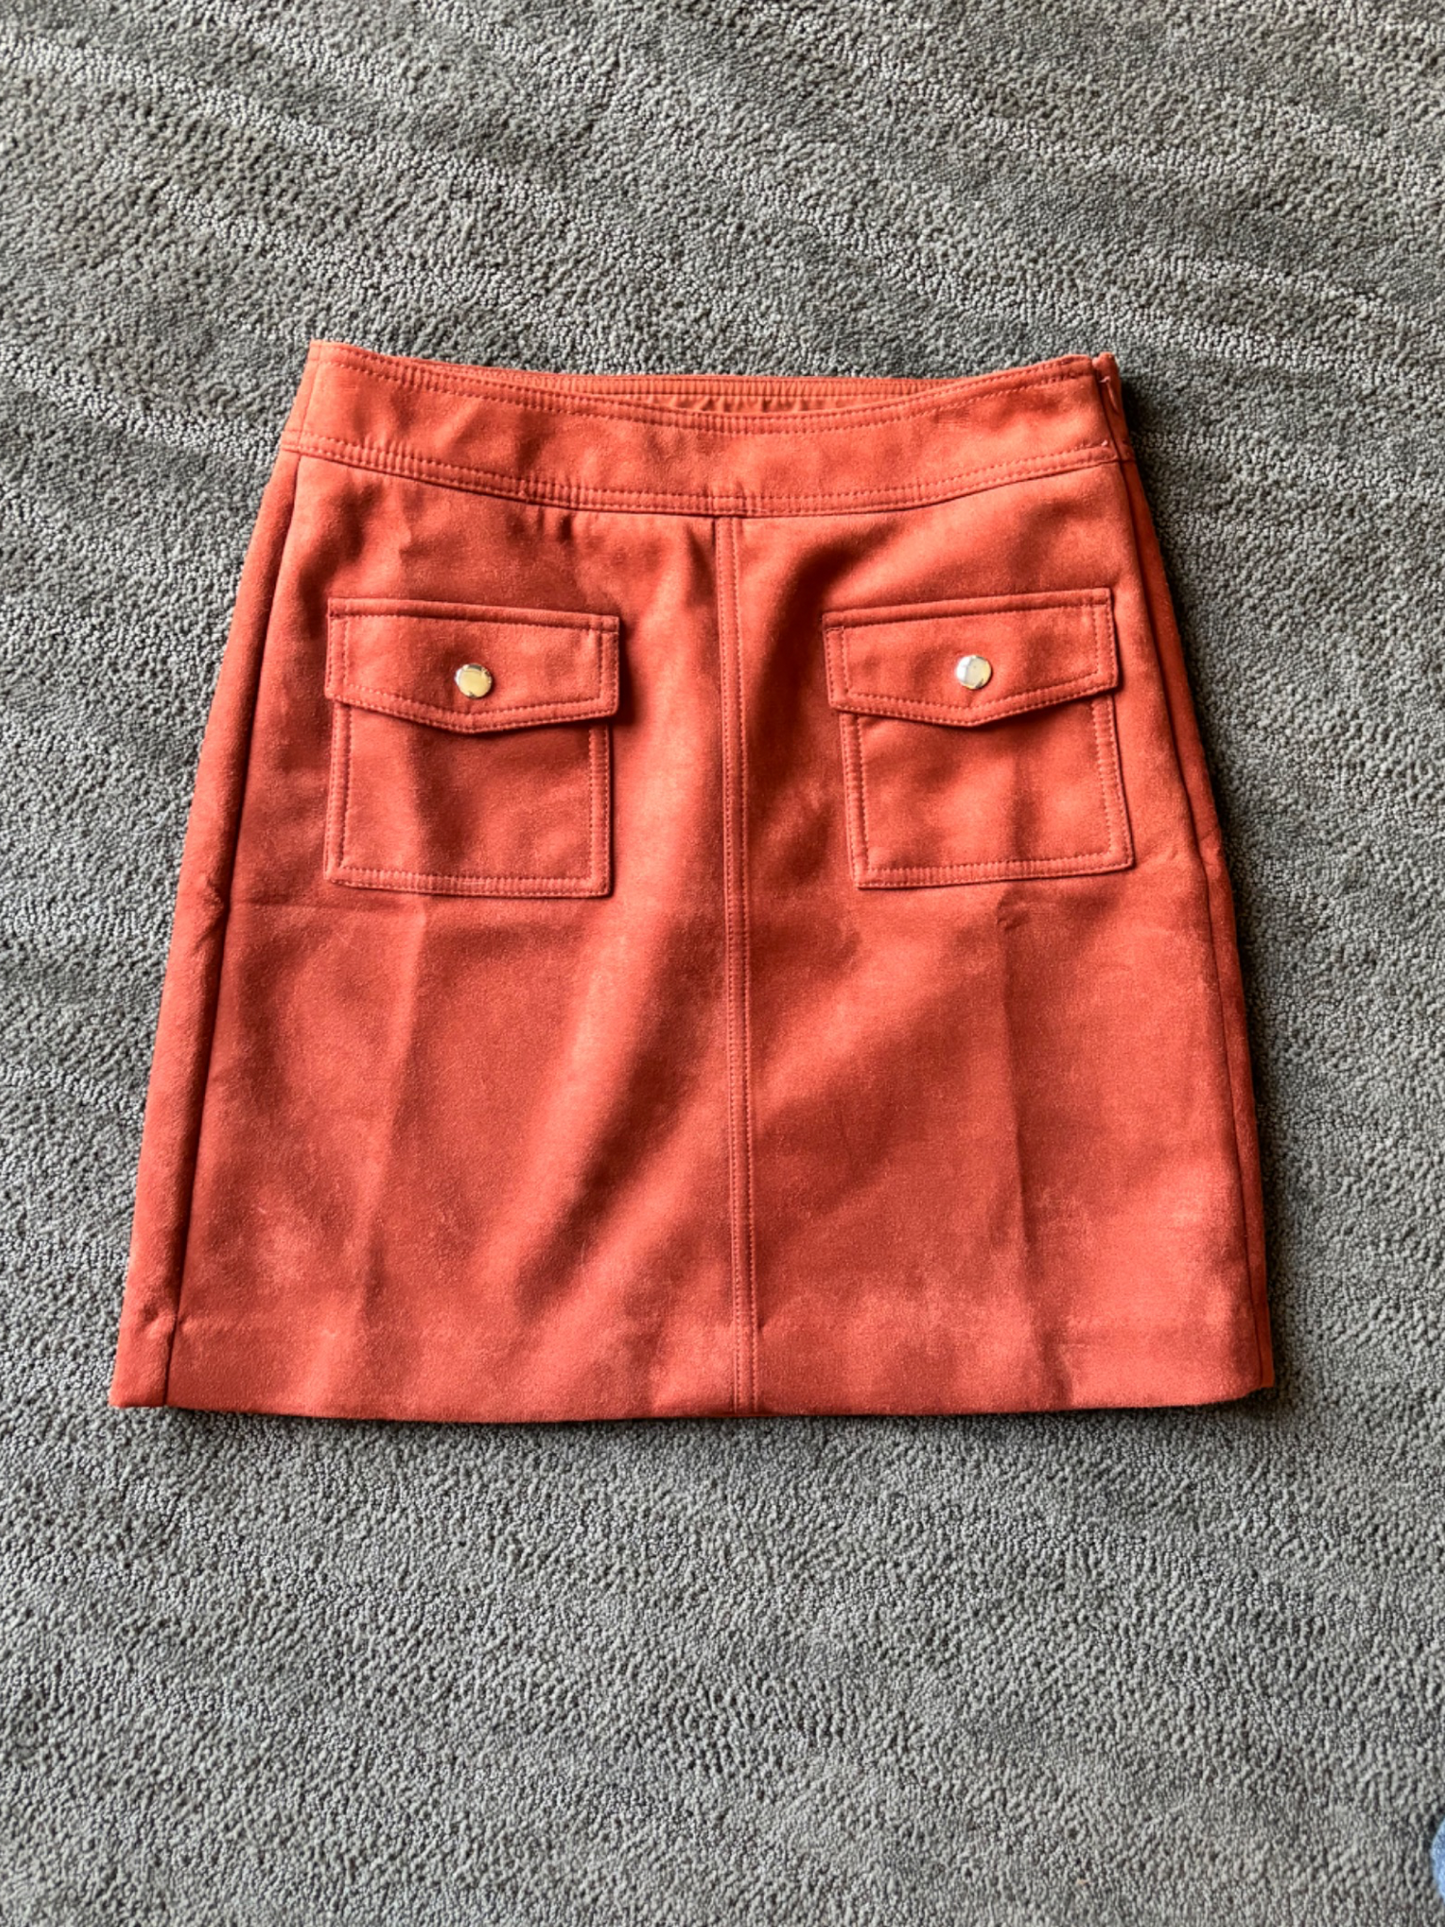 Loft burnt orange suede skirt size 2